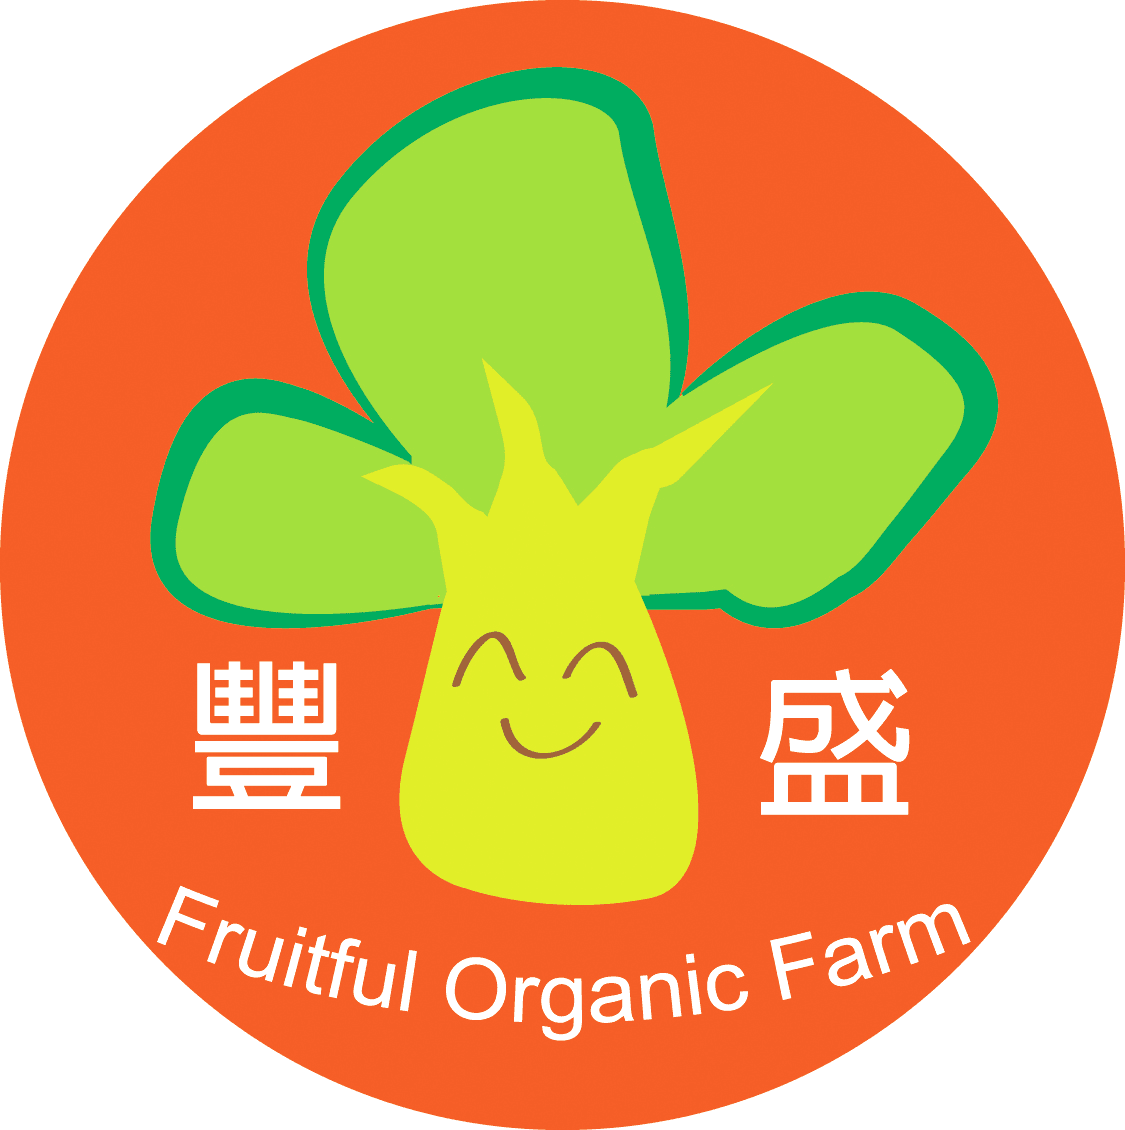 FruitfulOrganicFarm